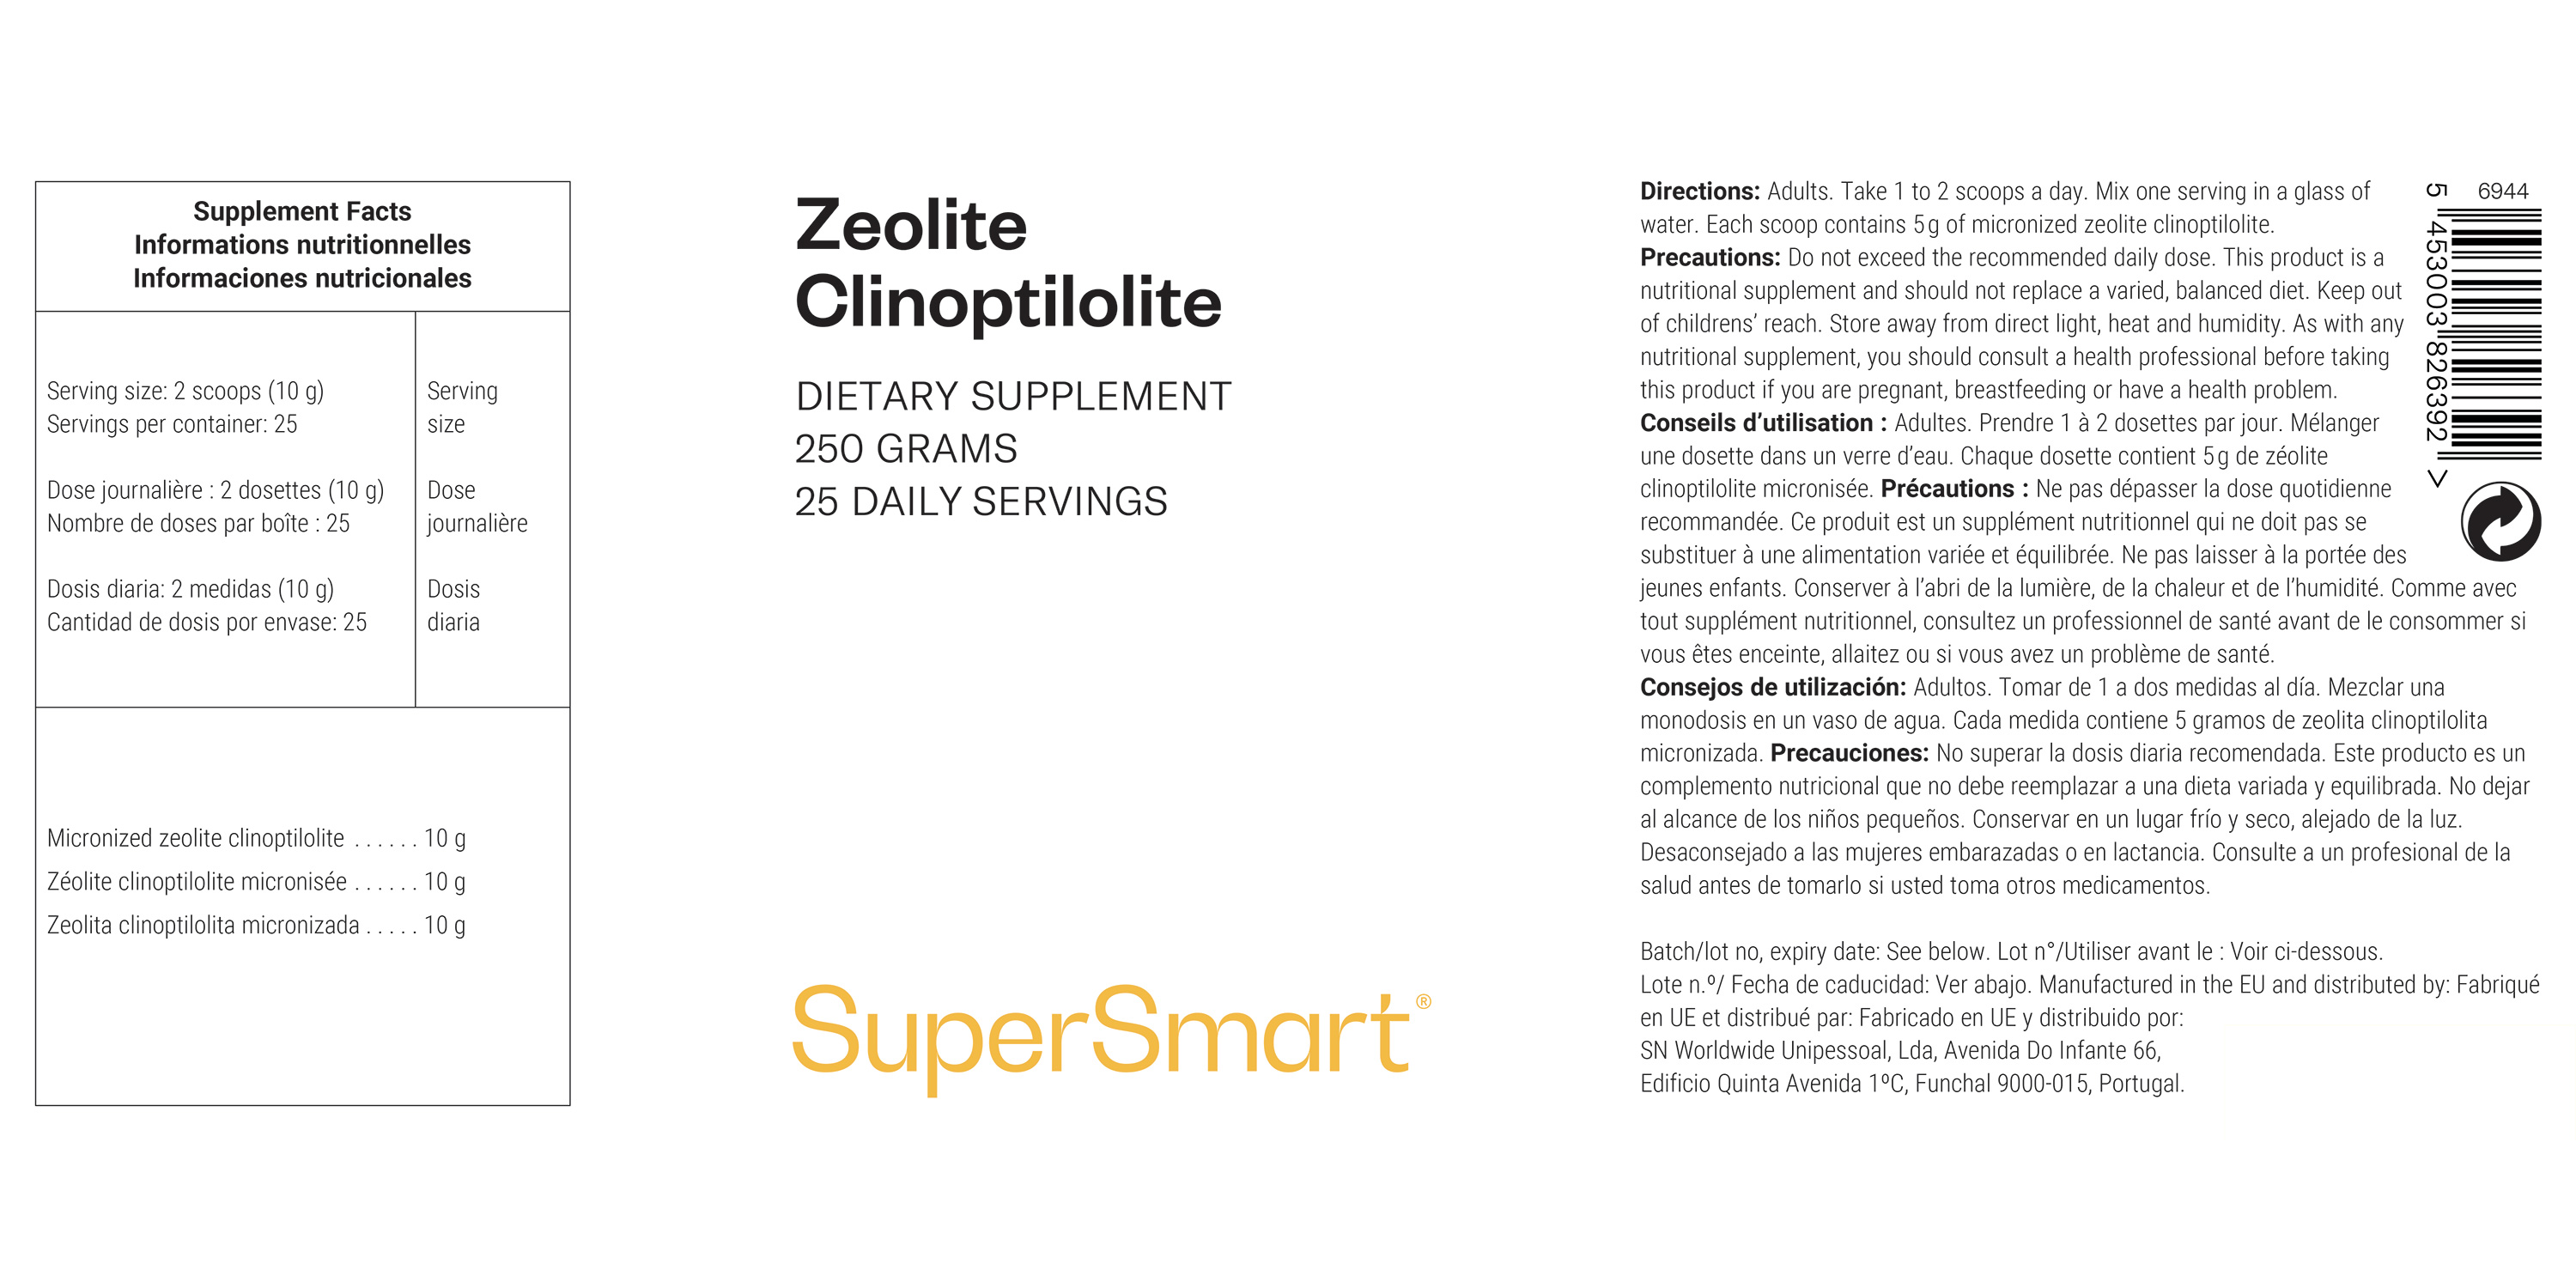 Zeolite Clinoptilolite Supplement 